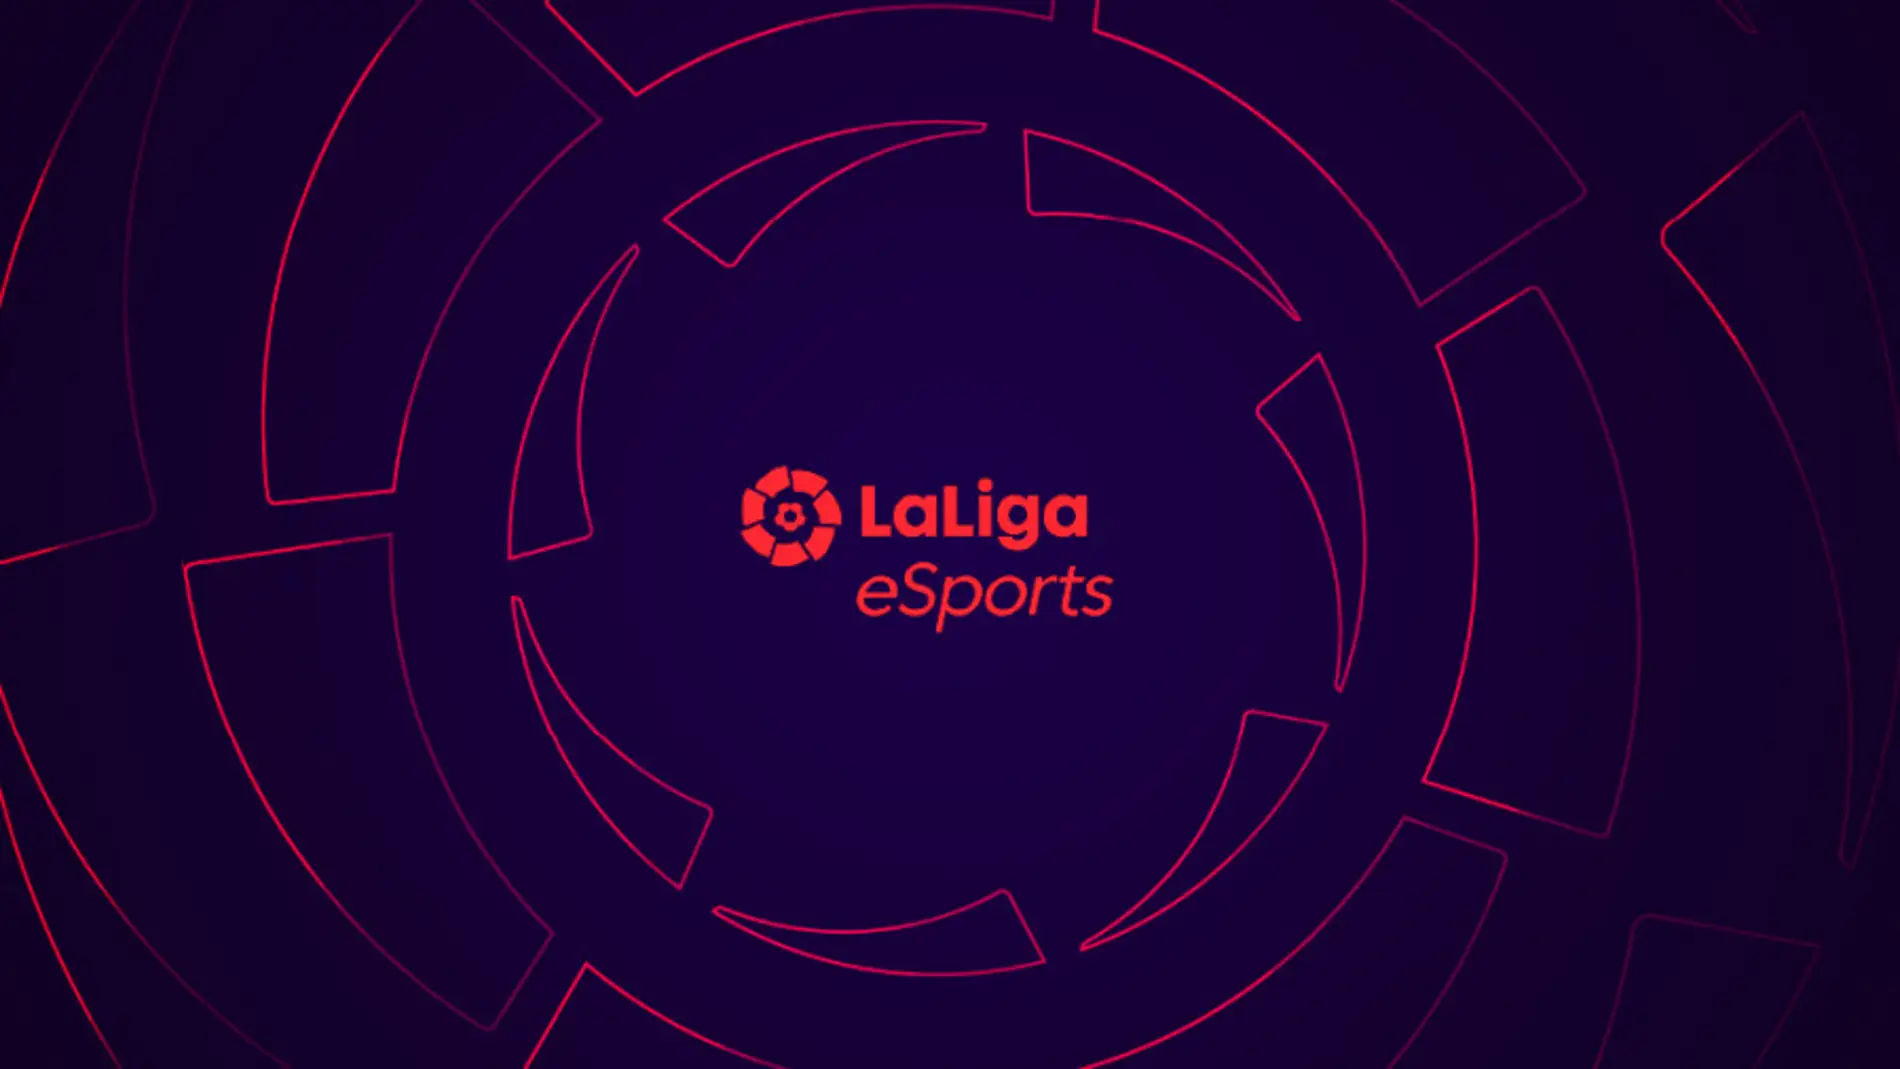 LaLiga eSports